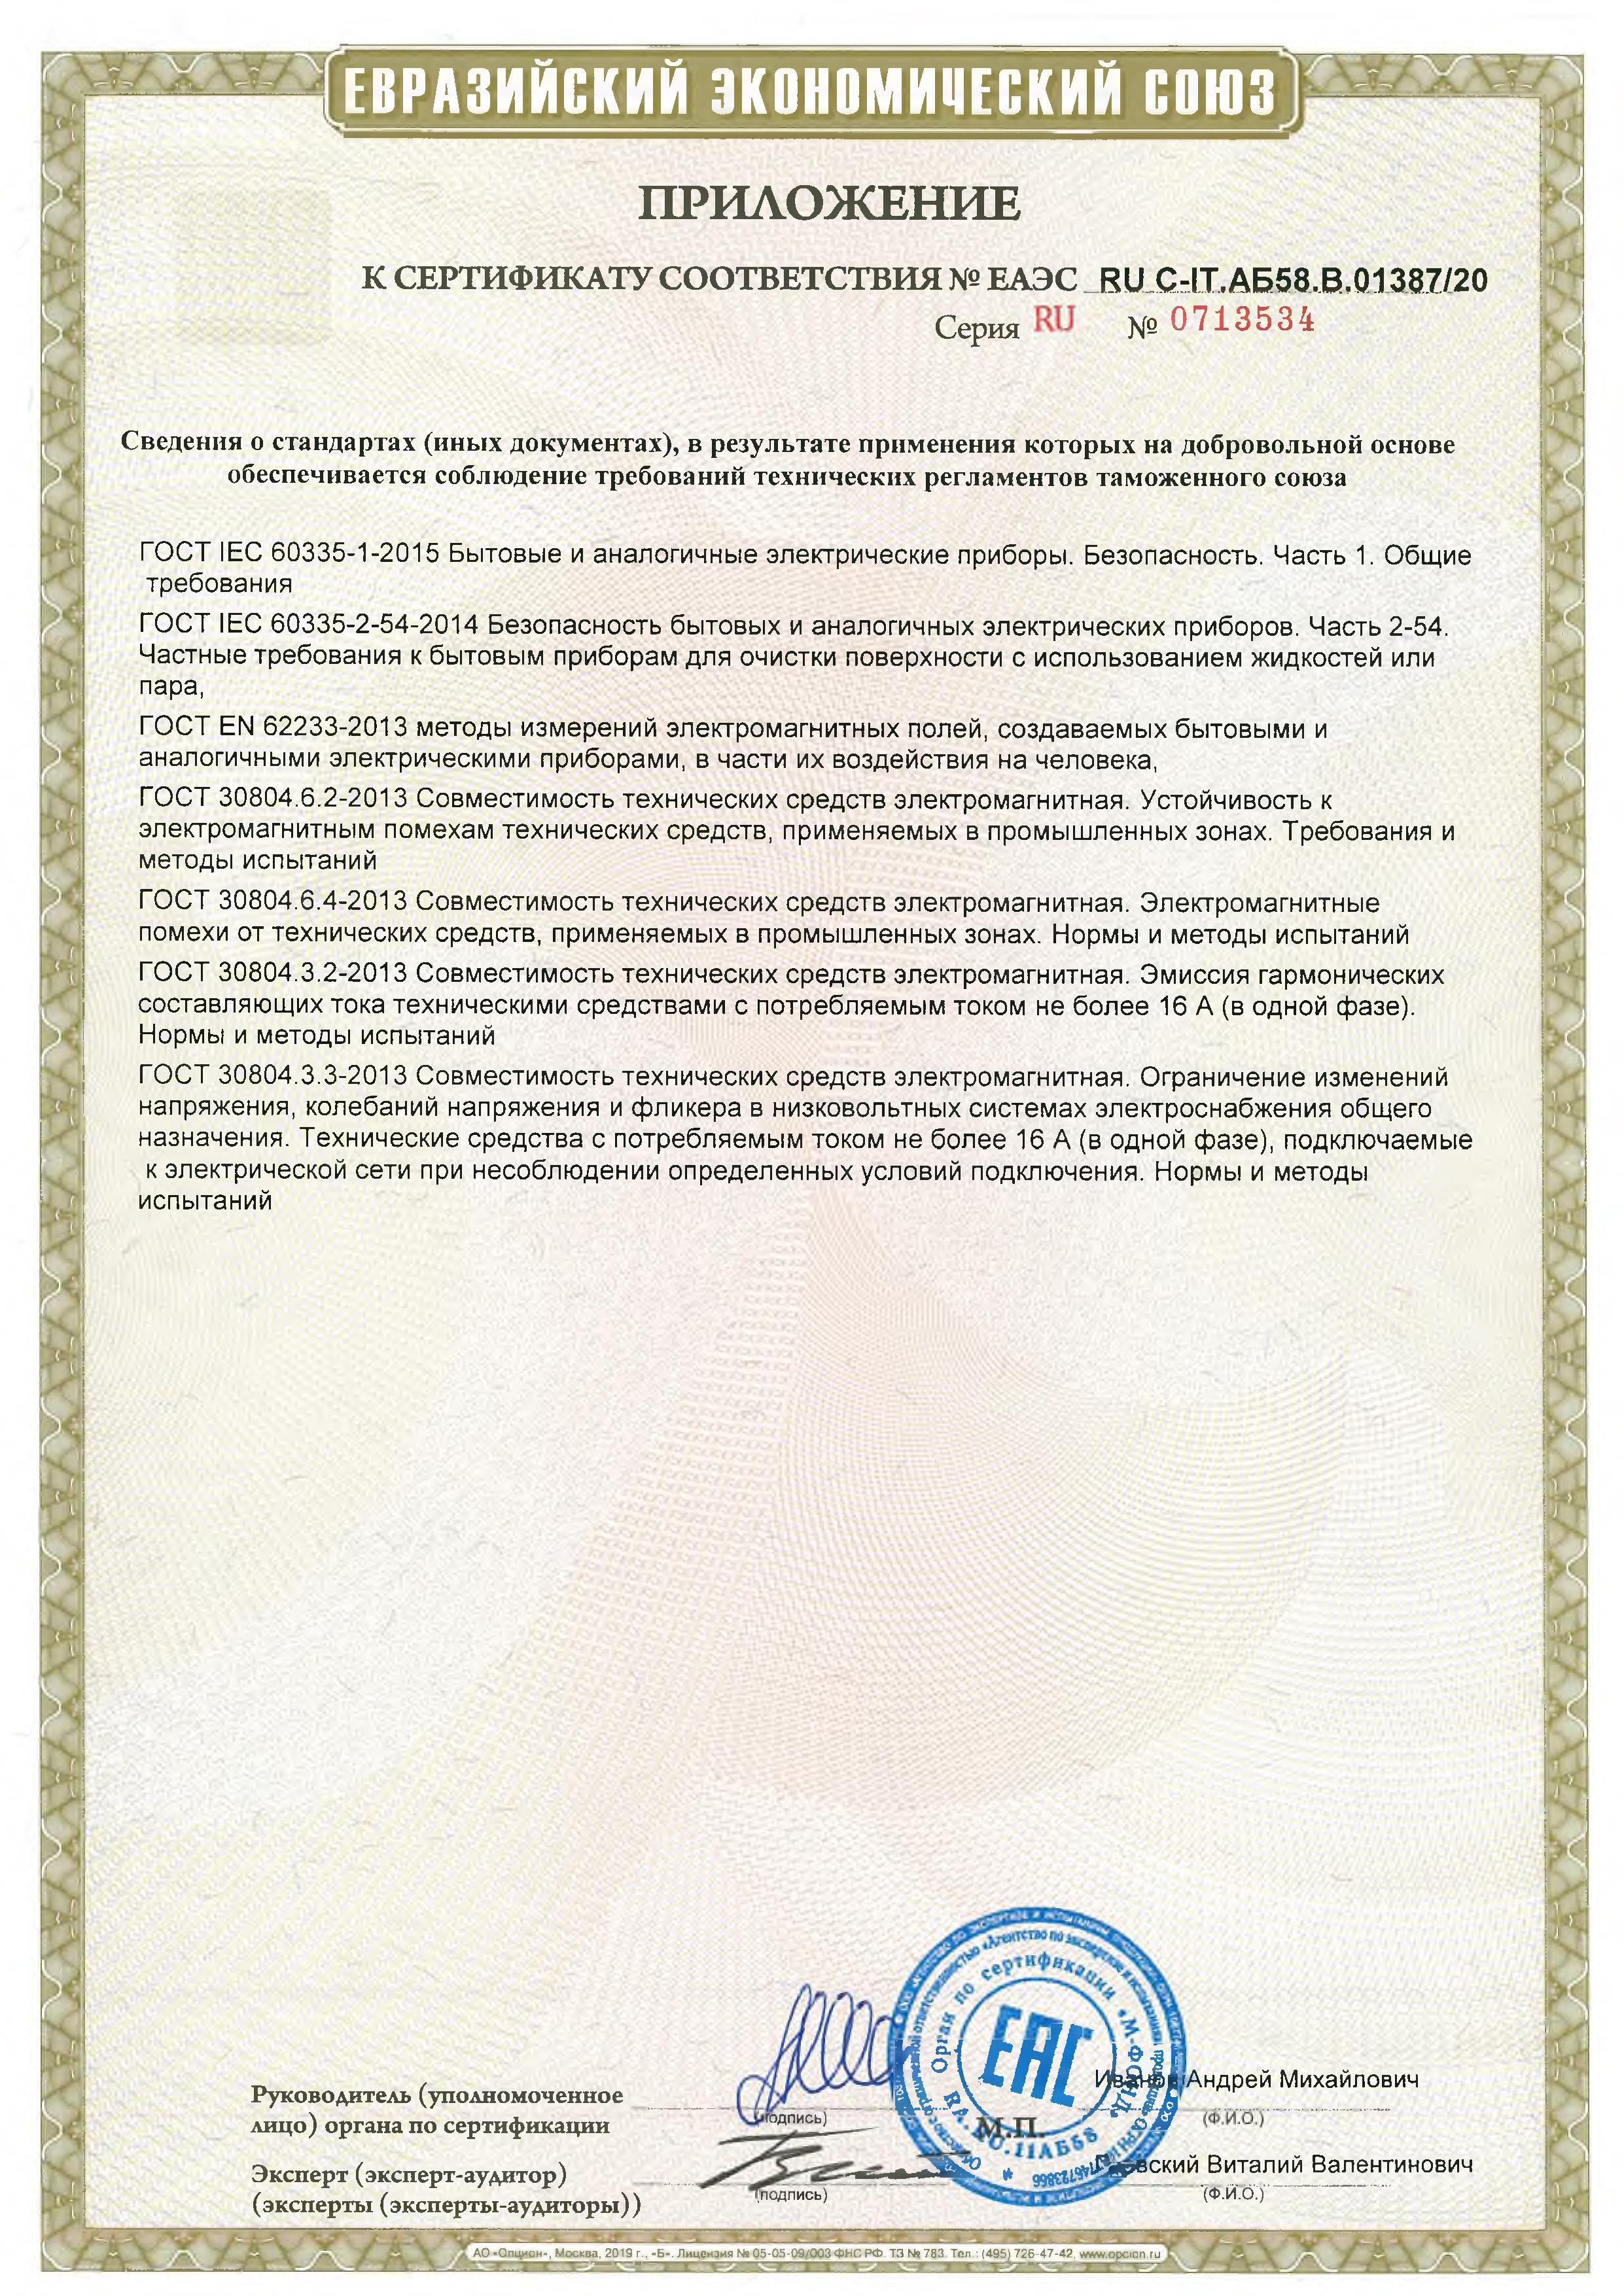 Сертификат соответствия IPC Portotecnika